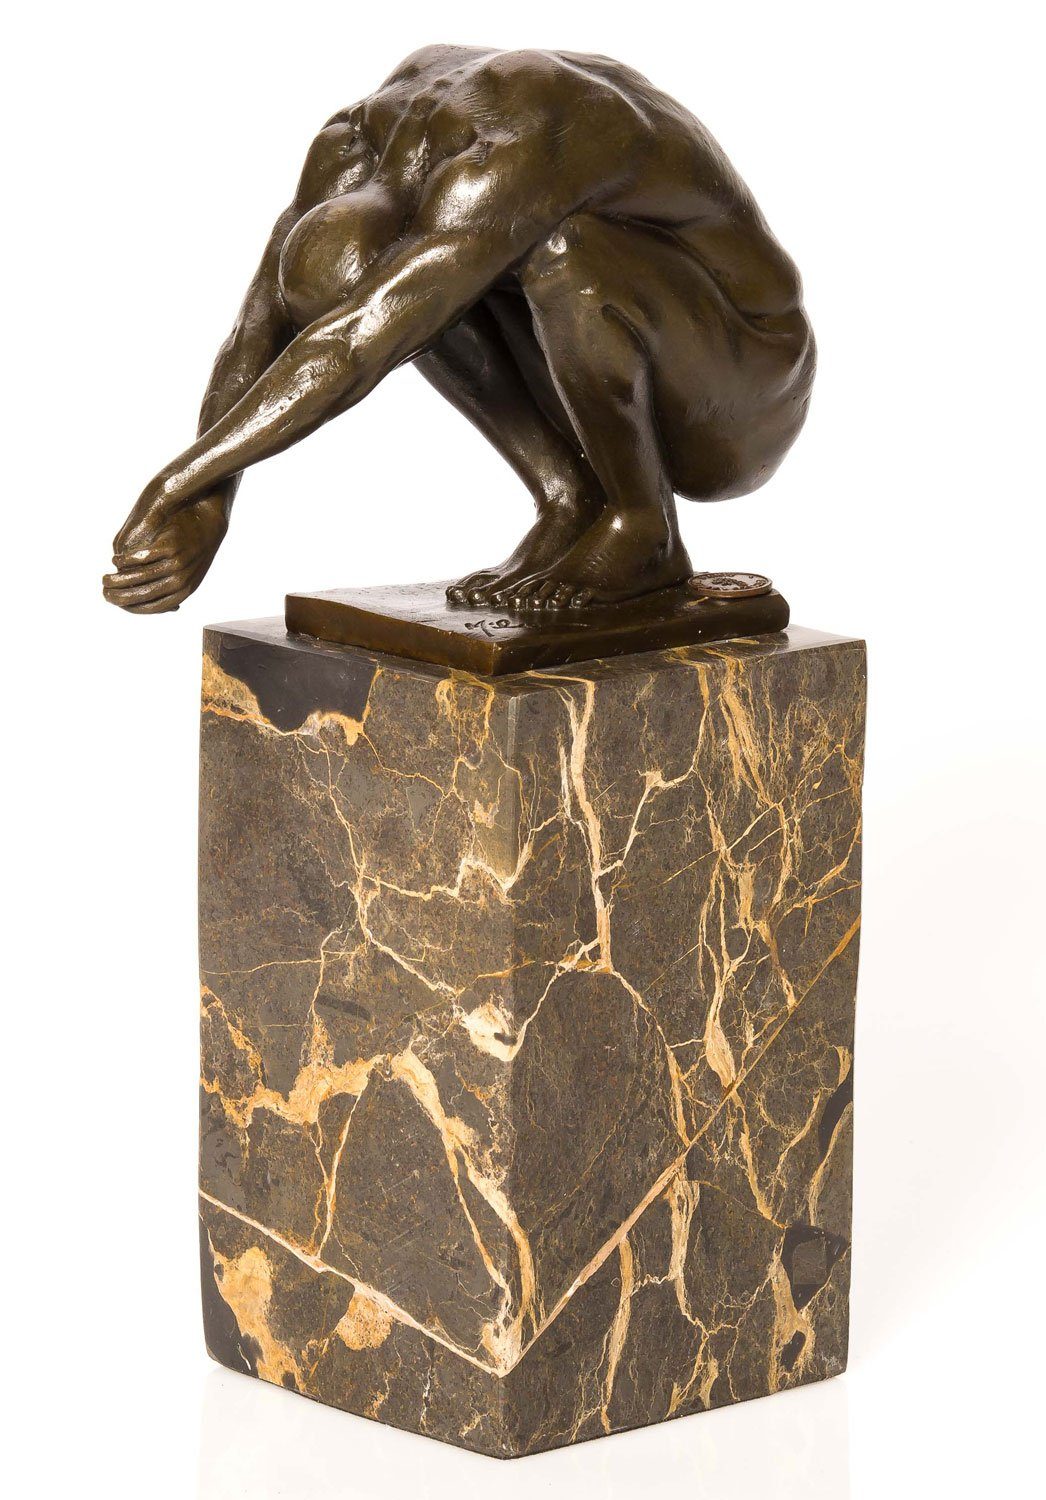 Bronze Skulptur Schwimmer Aubaho Erotik Skulptur antik Skulptur Figur Turmspringer Akt